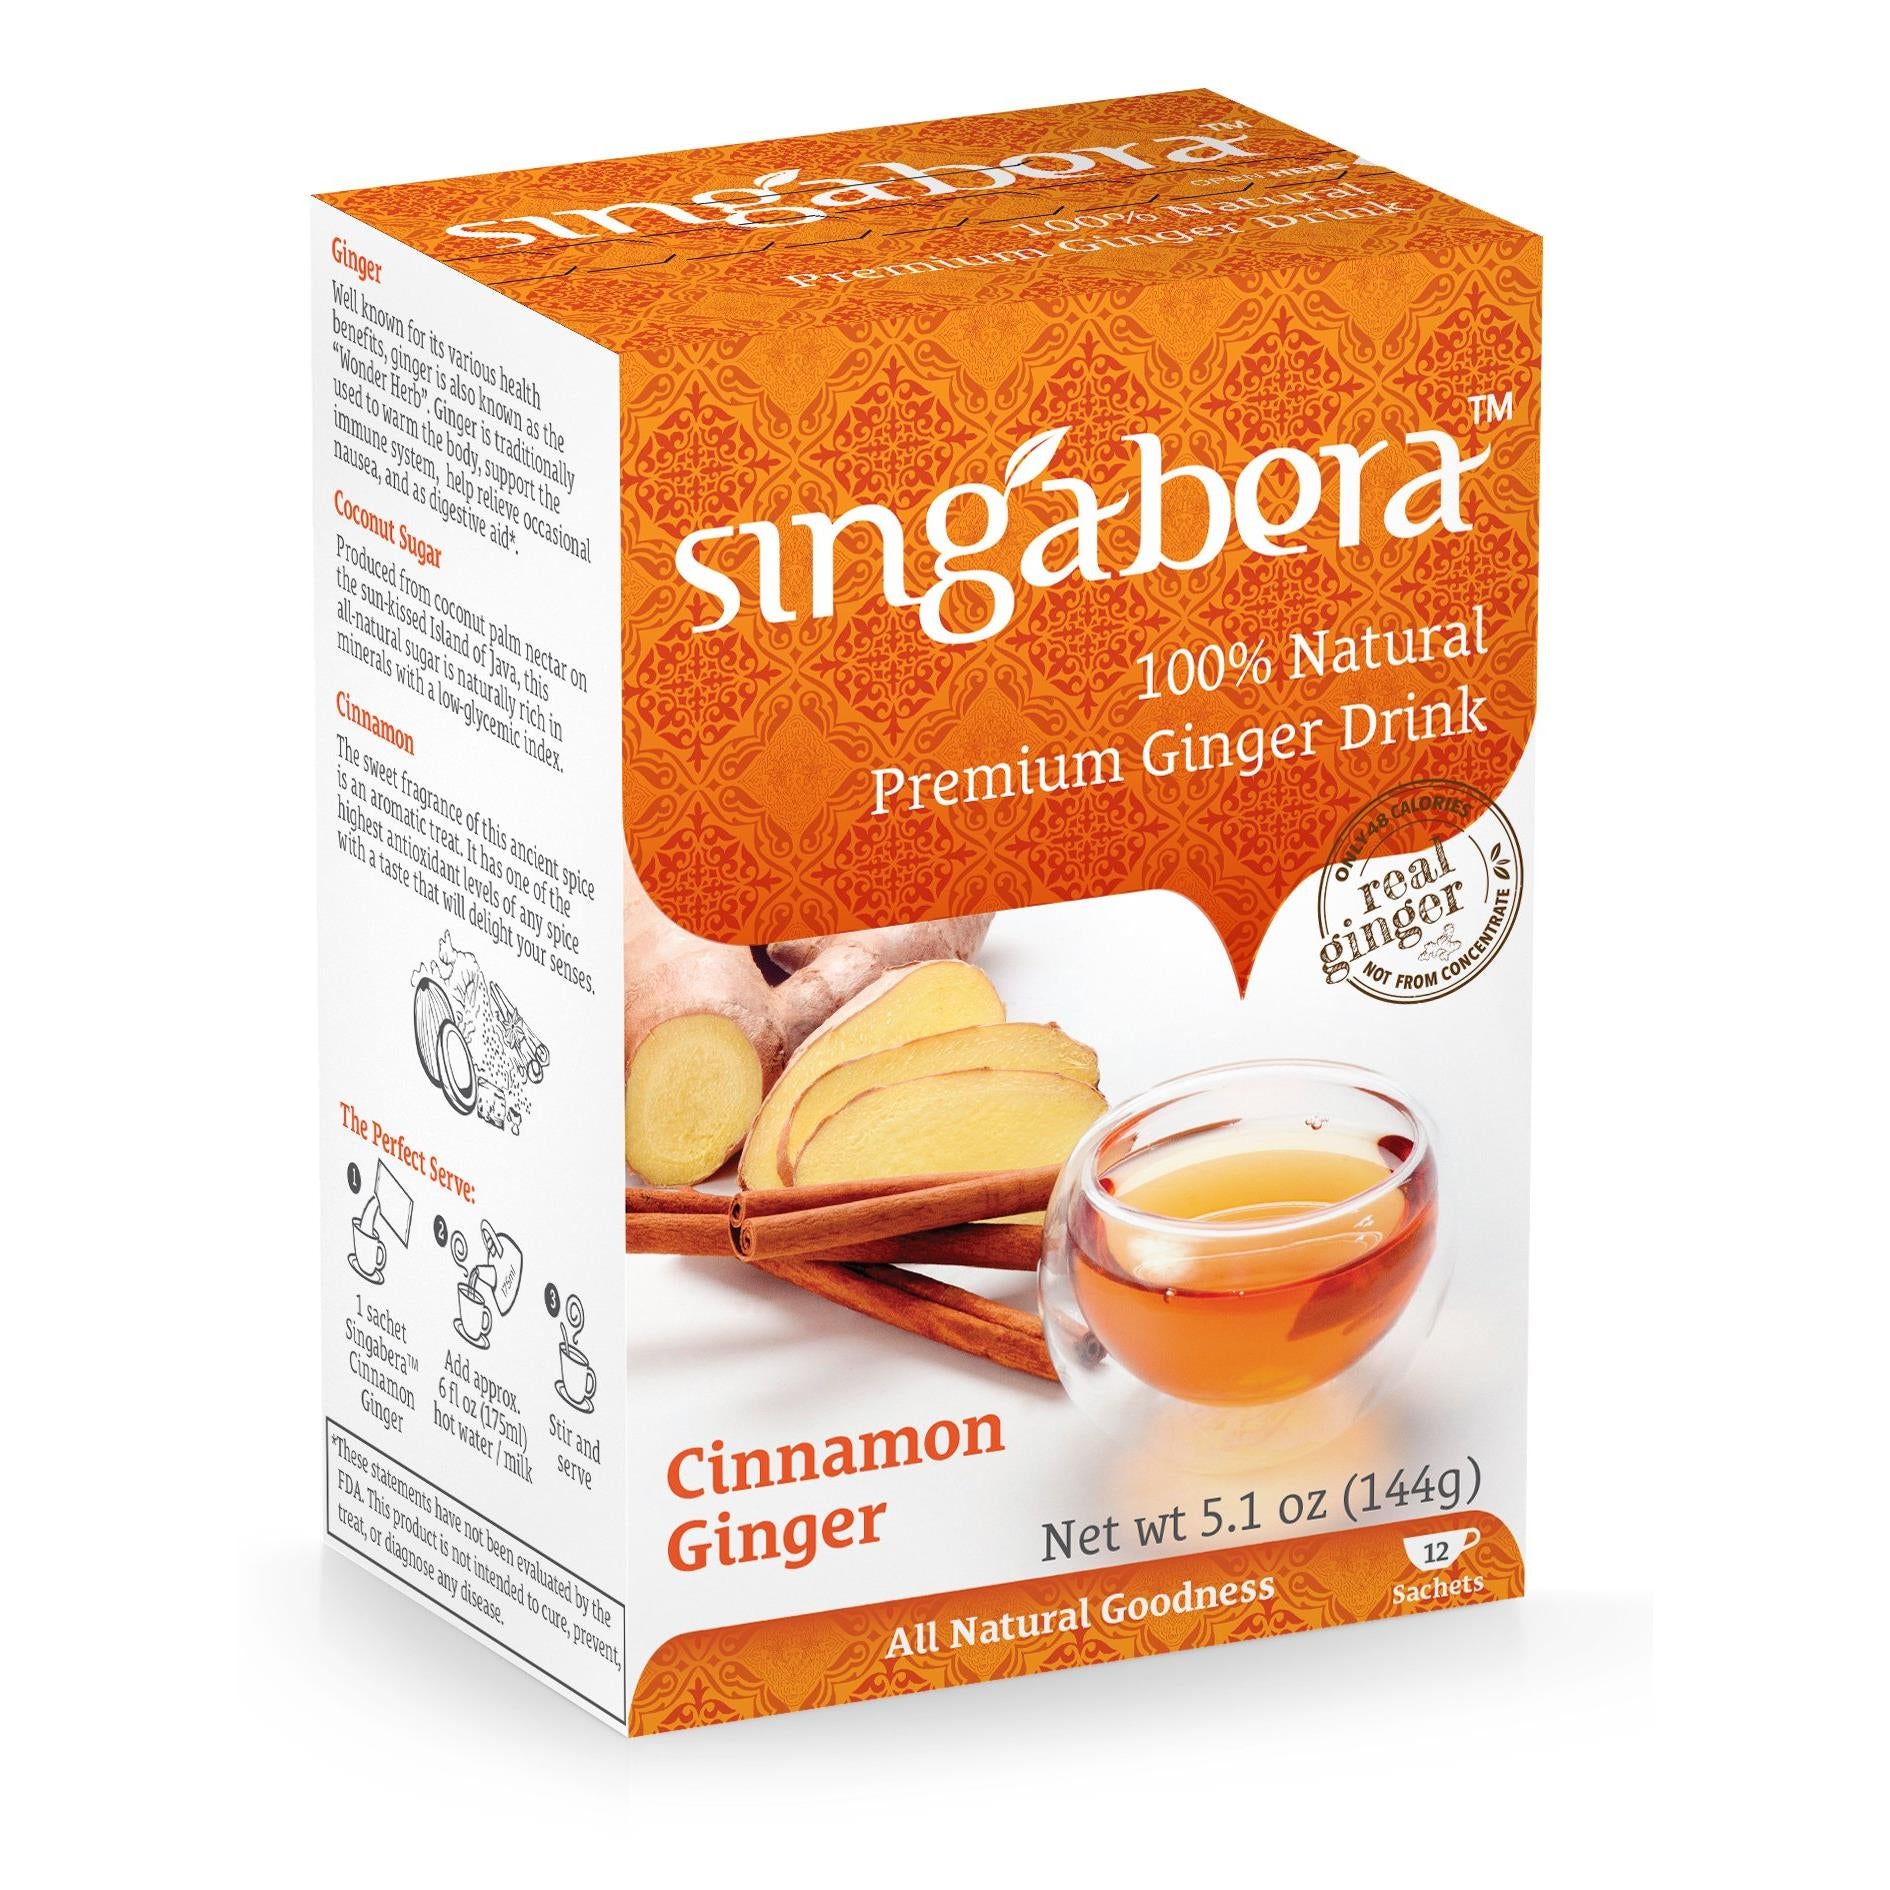 Singabera Ginger Drink Cinnamon Flavor (Pack of 6) 5.1oz